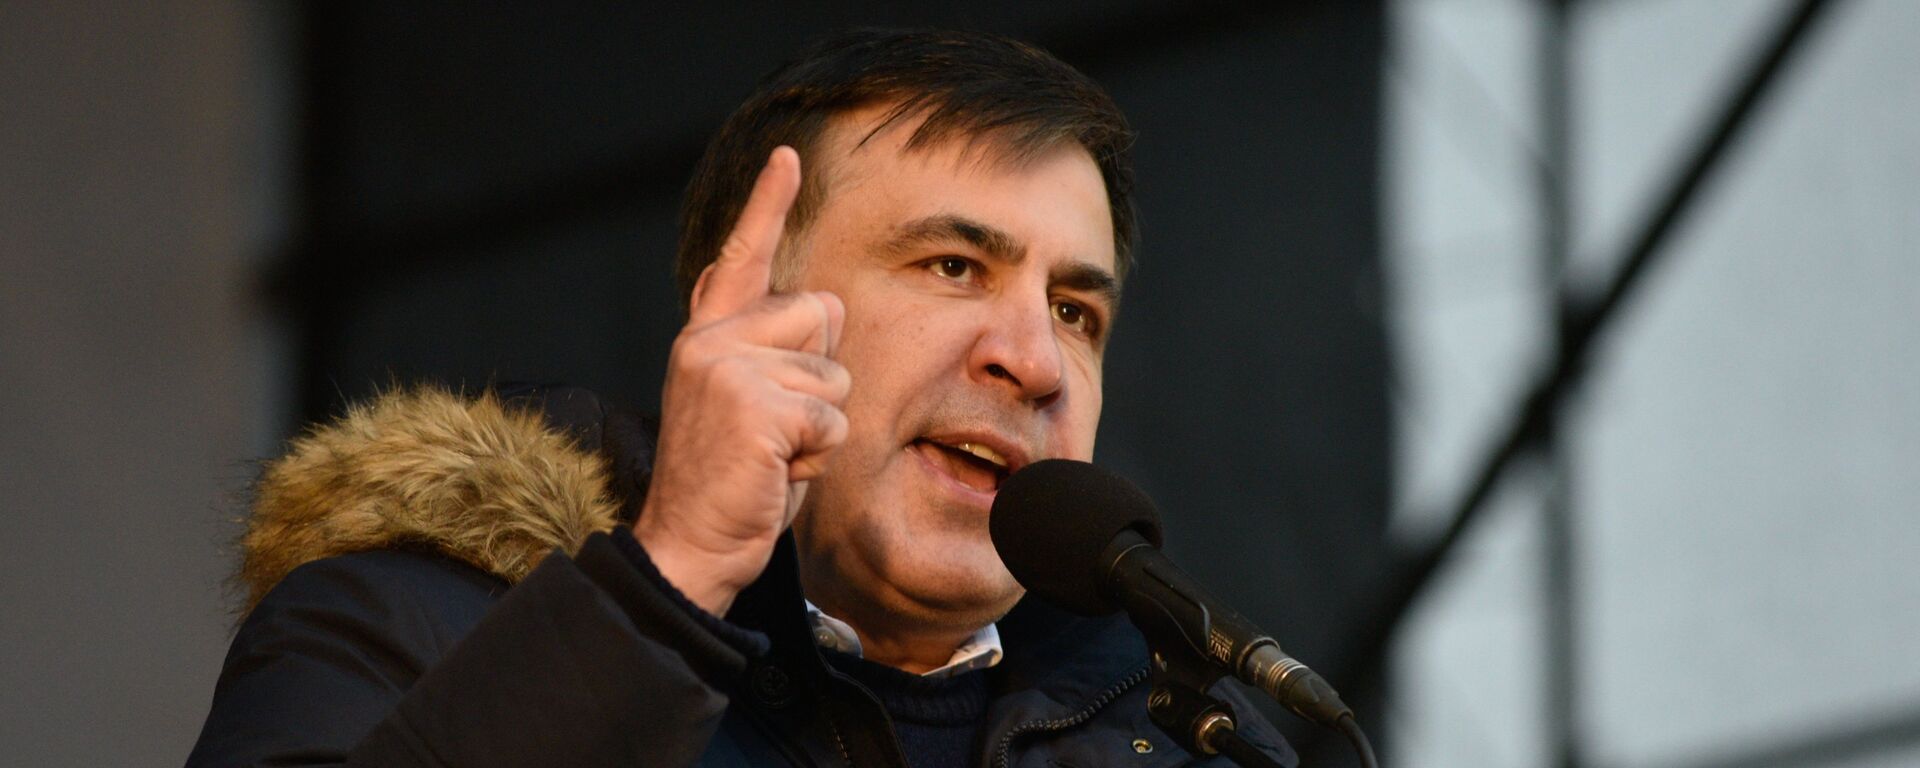 Mijaíl Saakashvili, expresidente de Georgia y exgobernador de la región ucraniana de Odesa - Sputnik Mundo, 1920, 08.11.2021